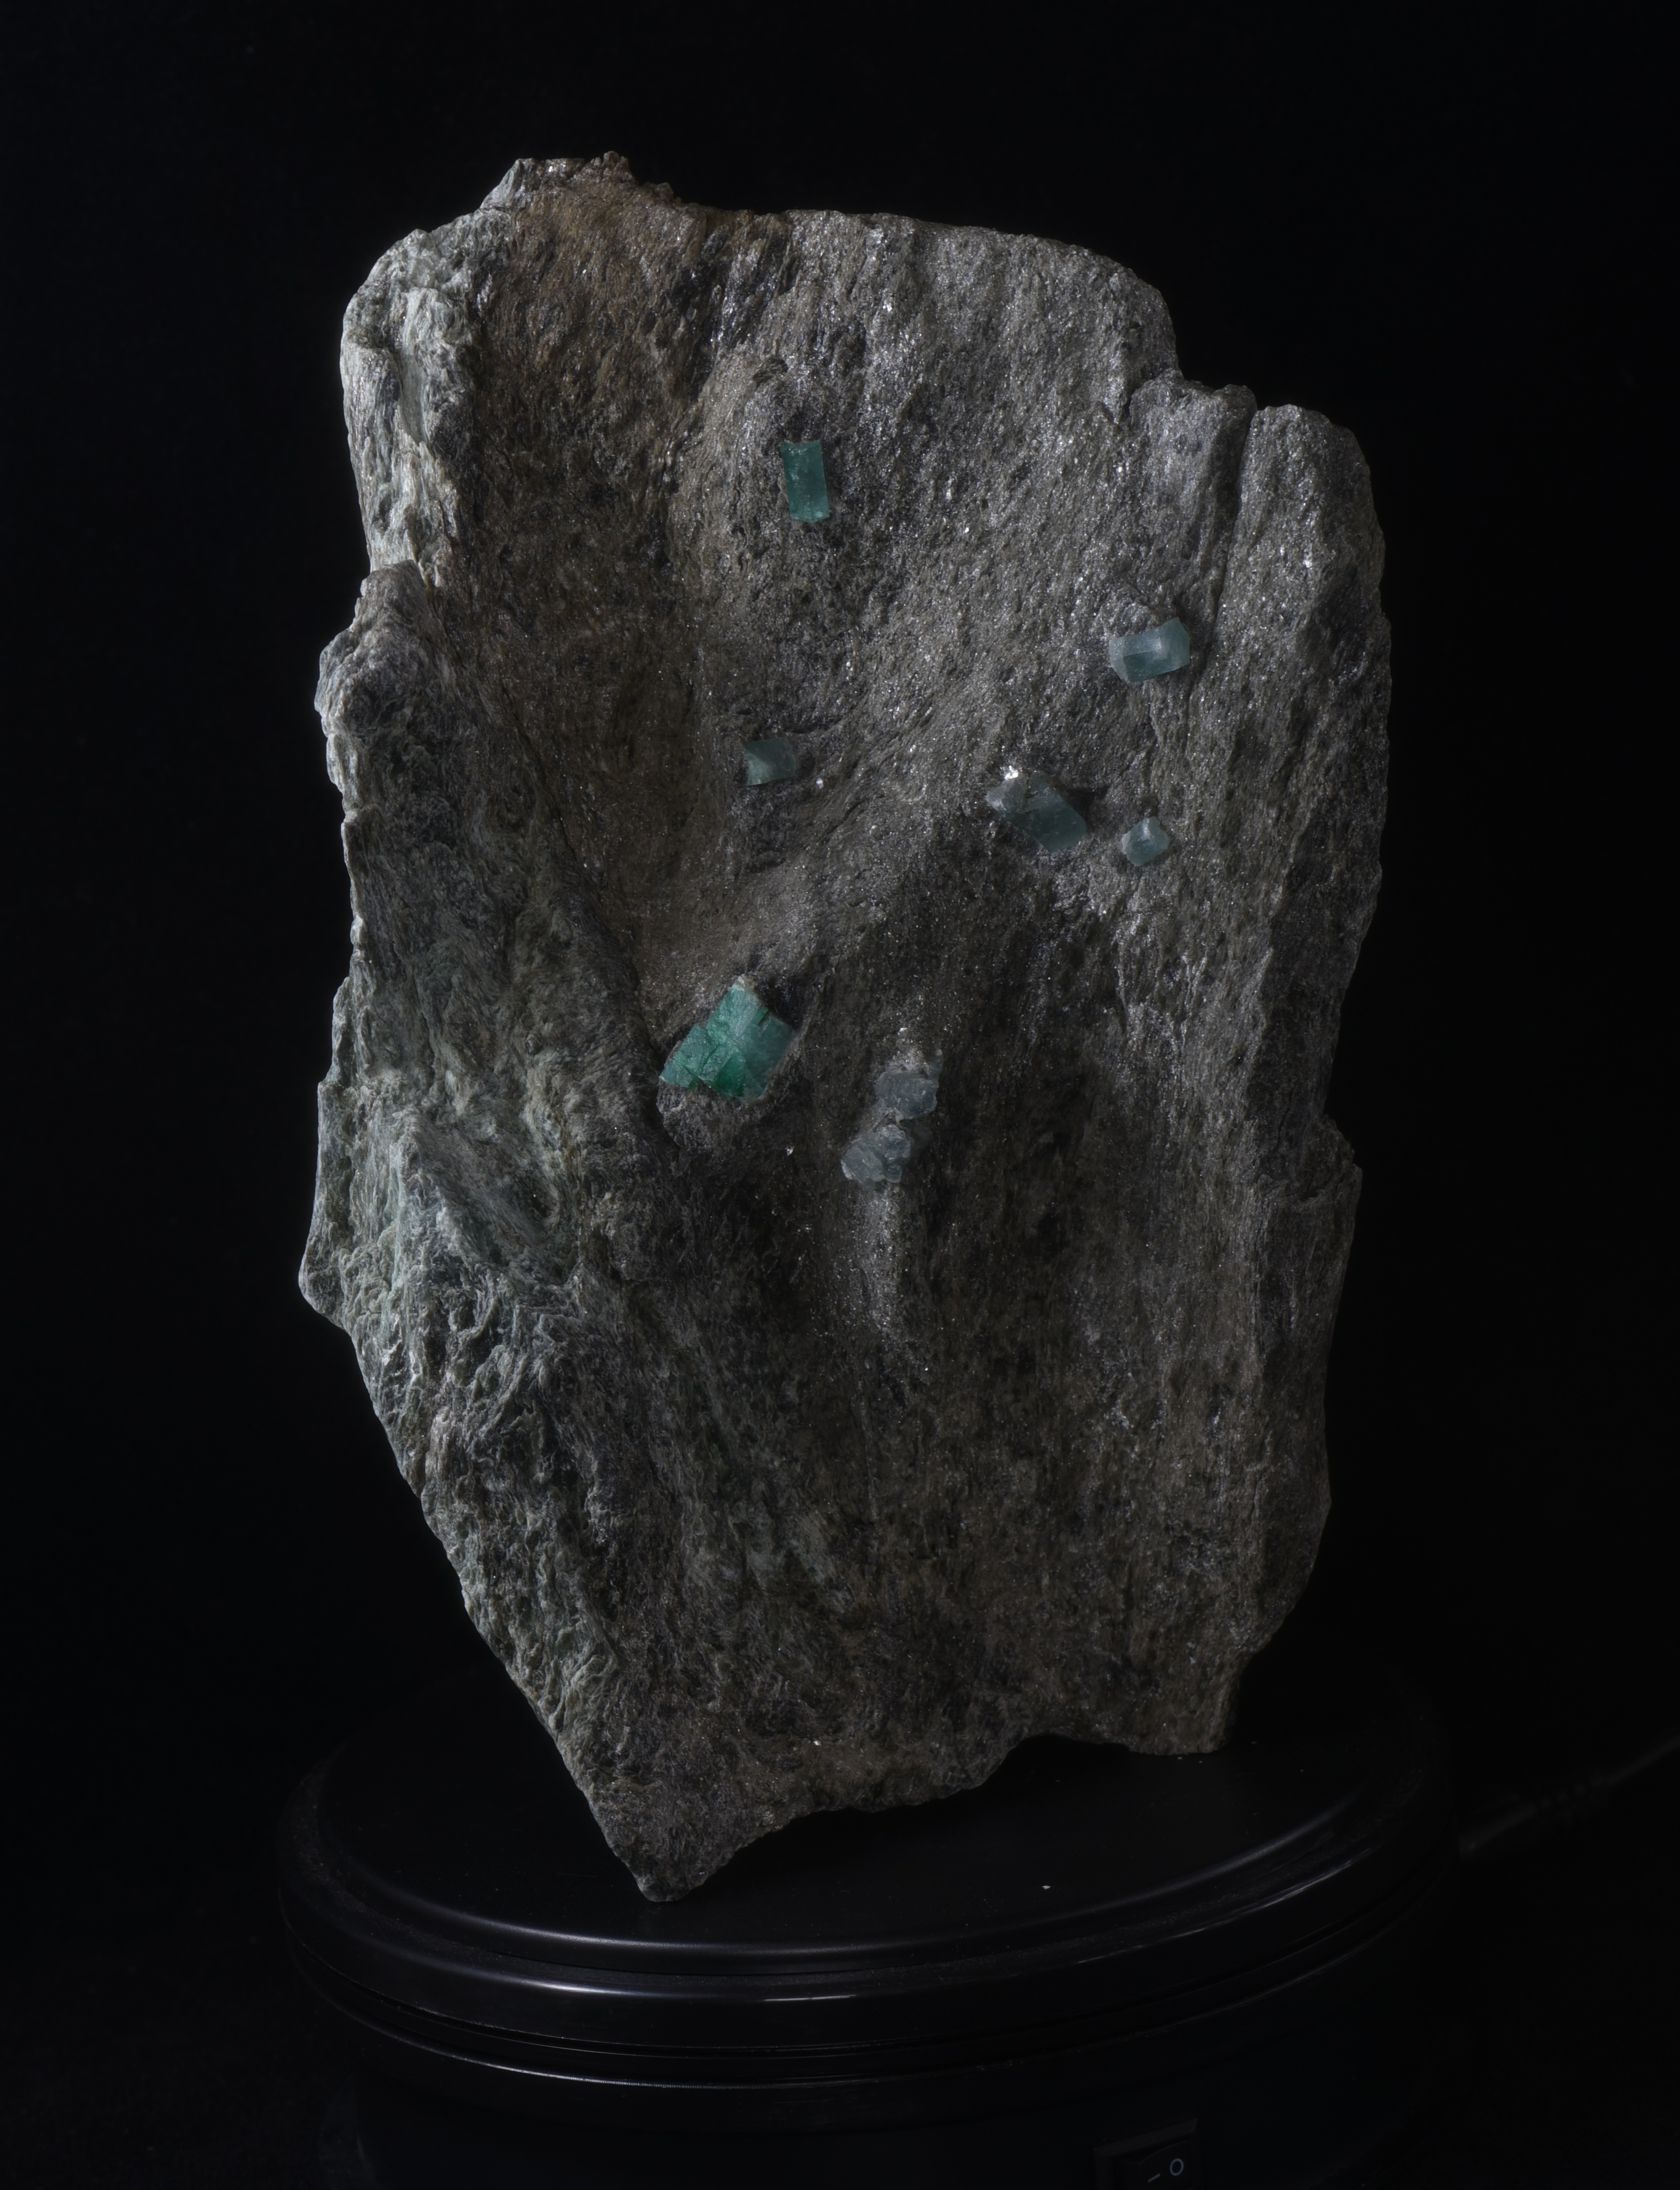 Emerald and Aquamarine on one specimen